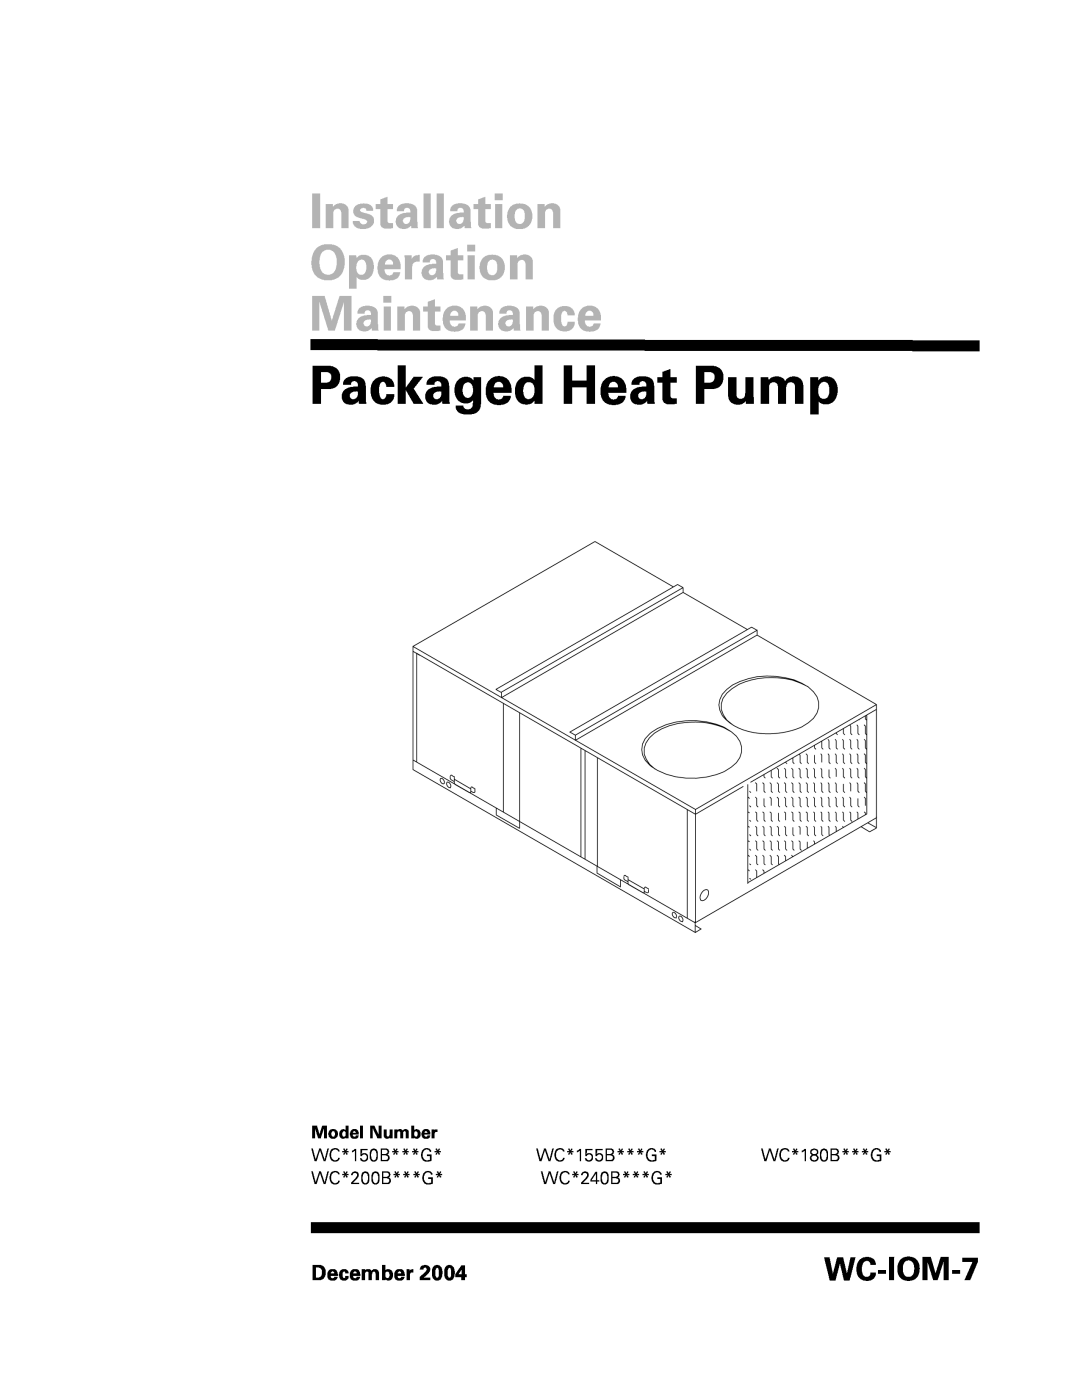 Trane WC-IOM-7 manual December, Model Number, Packaged Heat Pump, Installation Operation Maintenance 